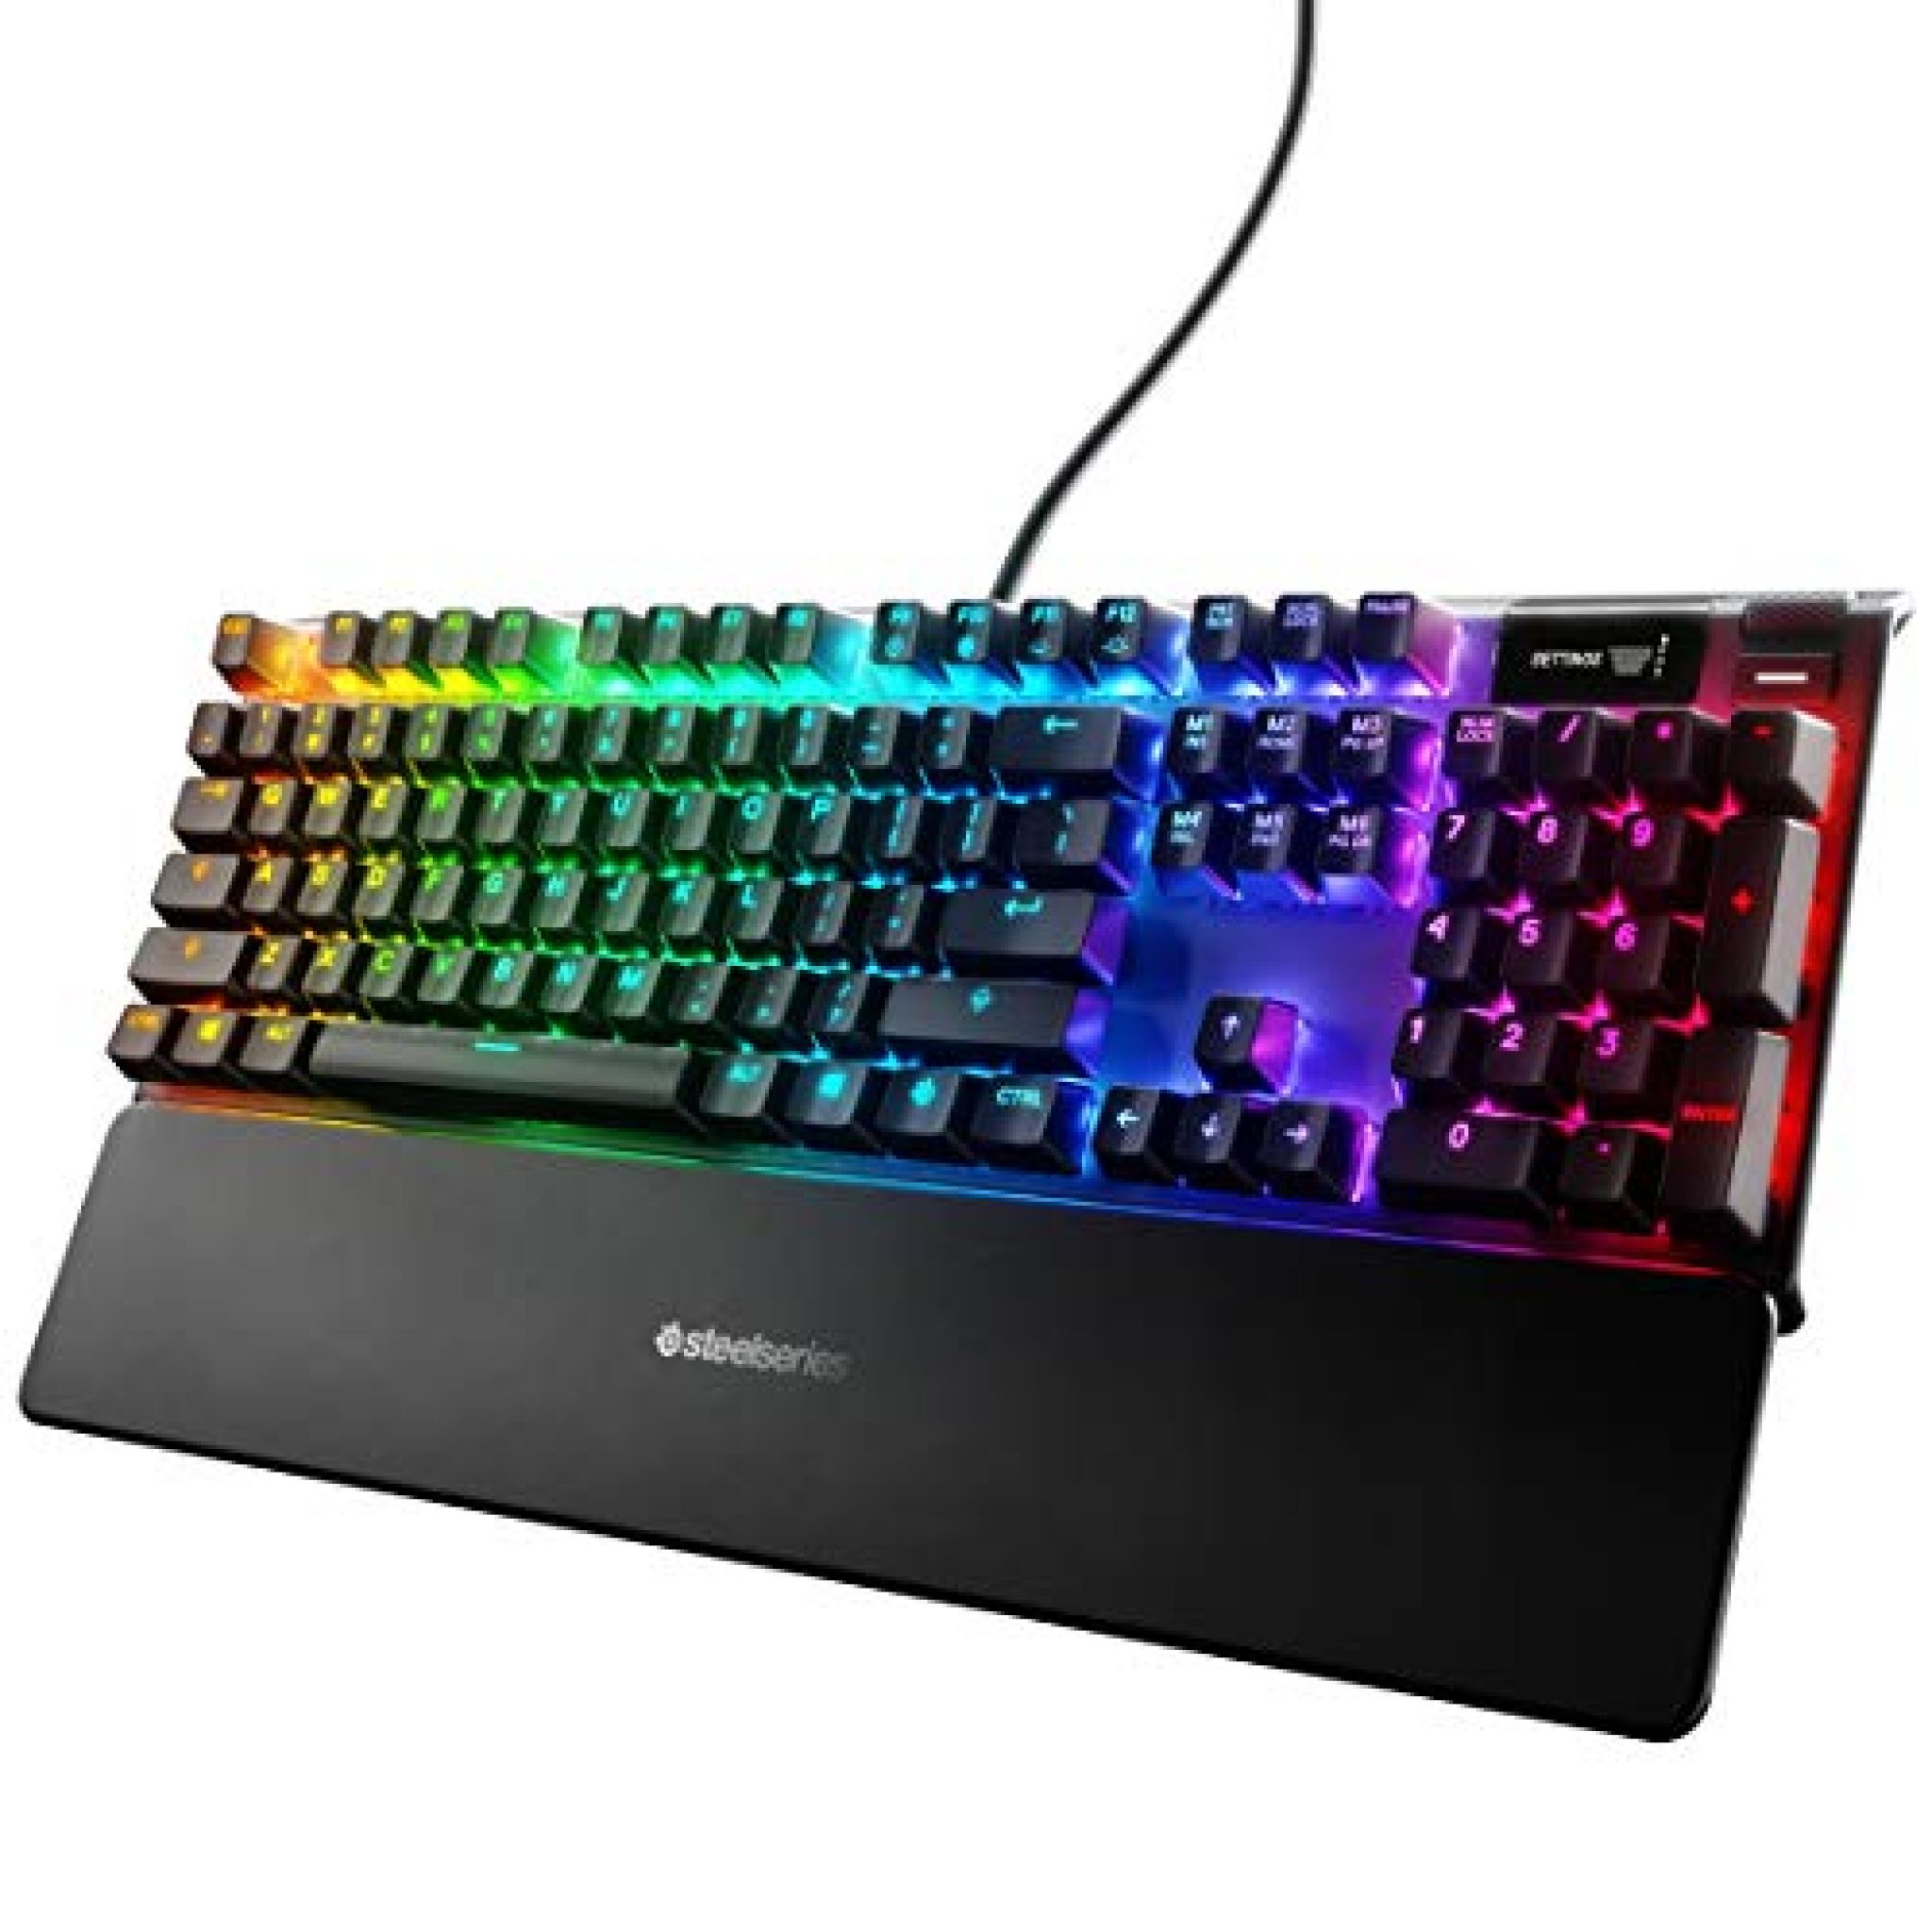 SteelSeries Apex Pro Mechanical Gaming Keyboard Adjustable Actuation